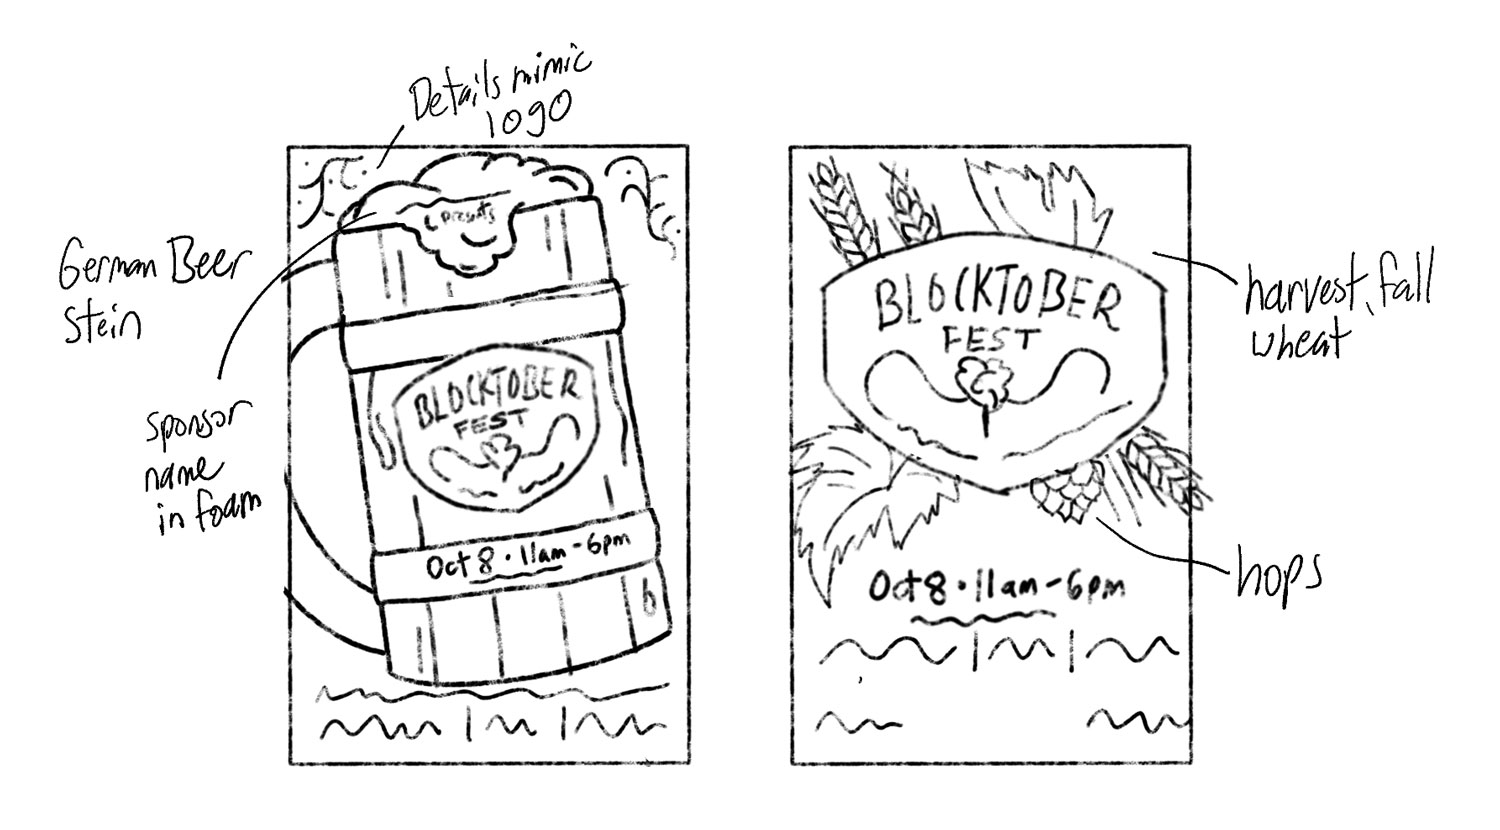 blocktober-poster-original-sketches